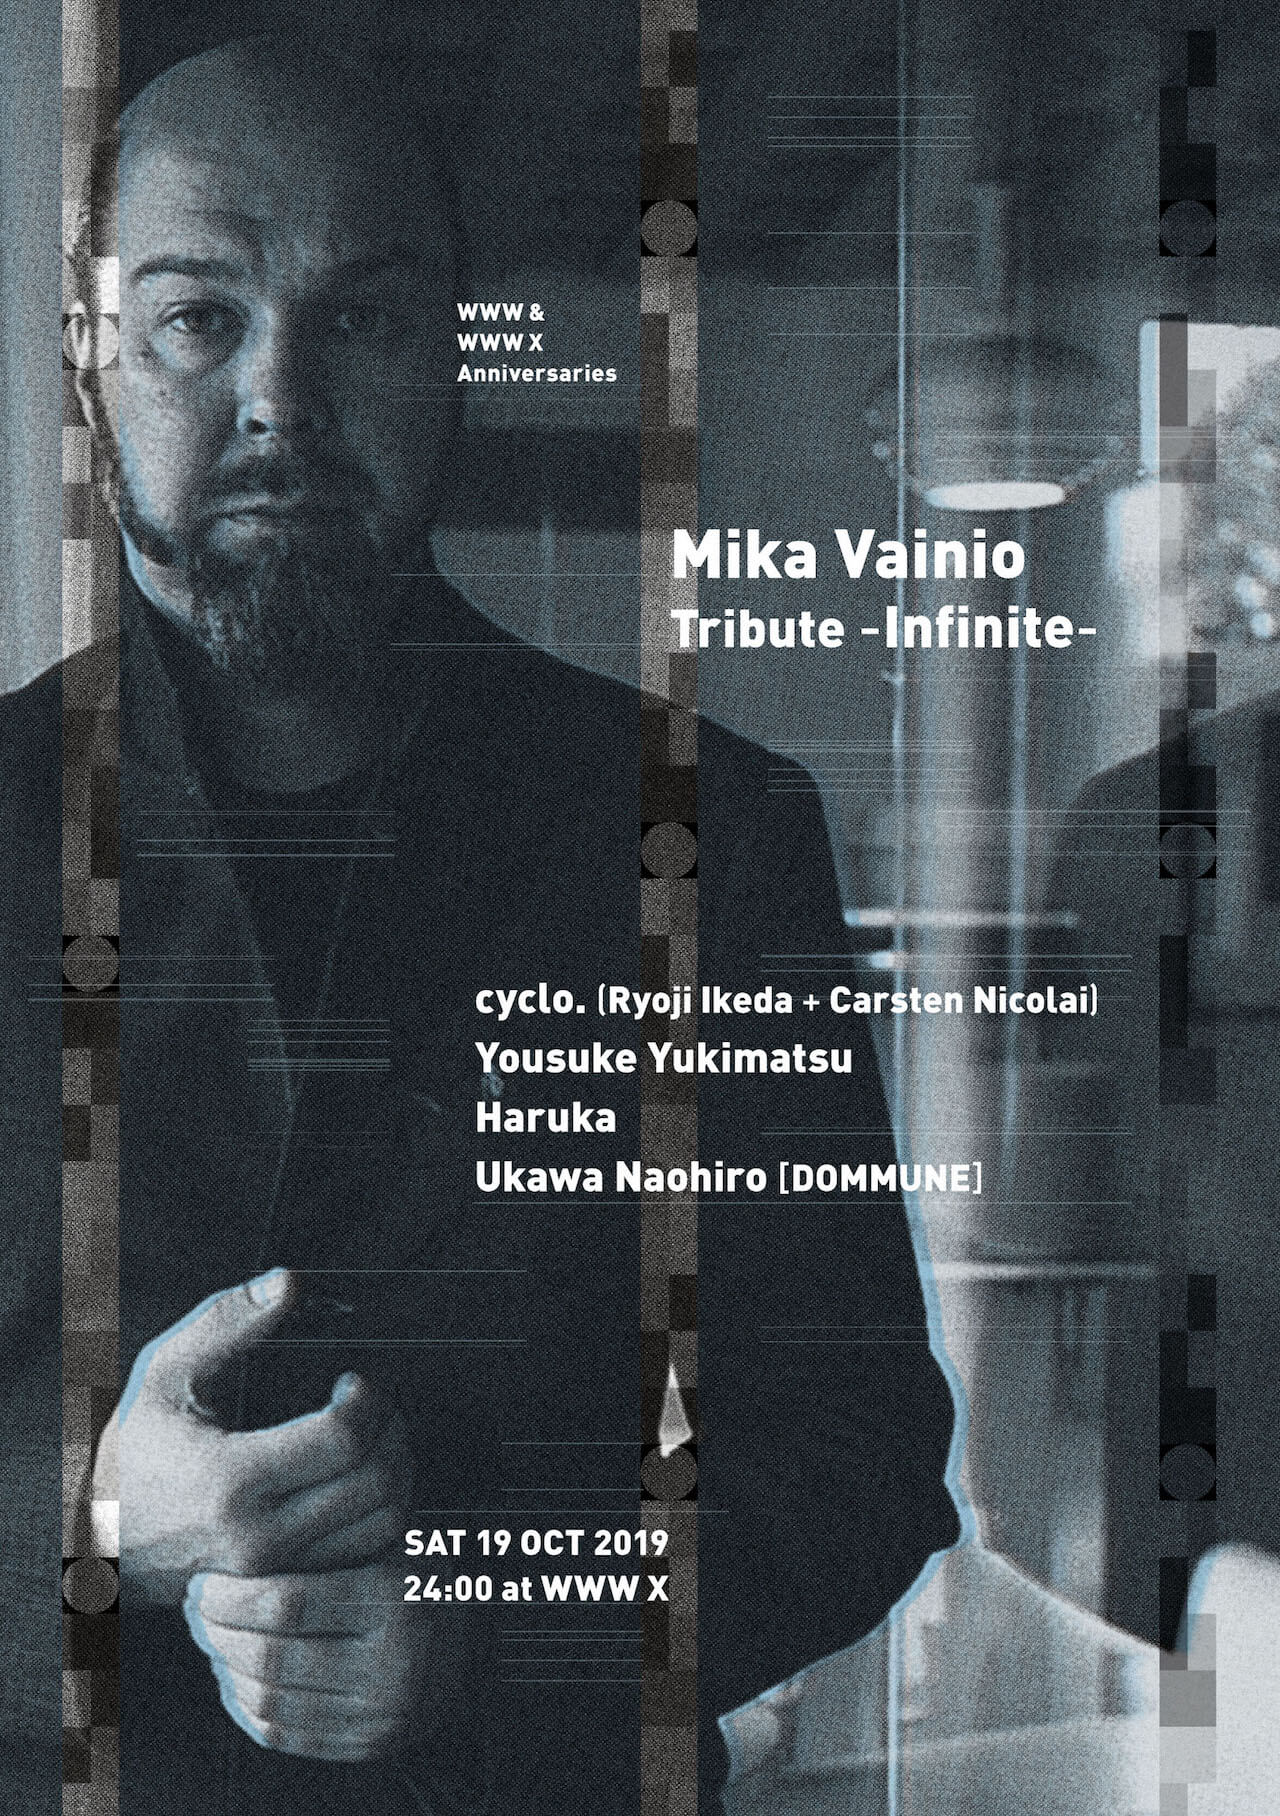 WWW & WWW X Anniversaries "Mika Vainio Tribute"